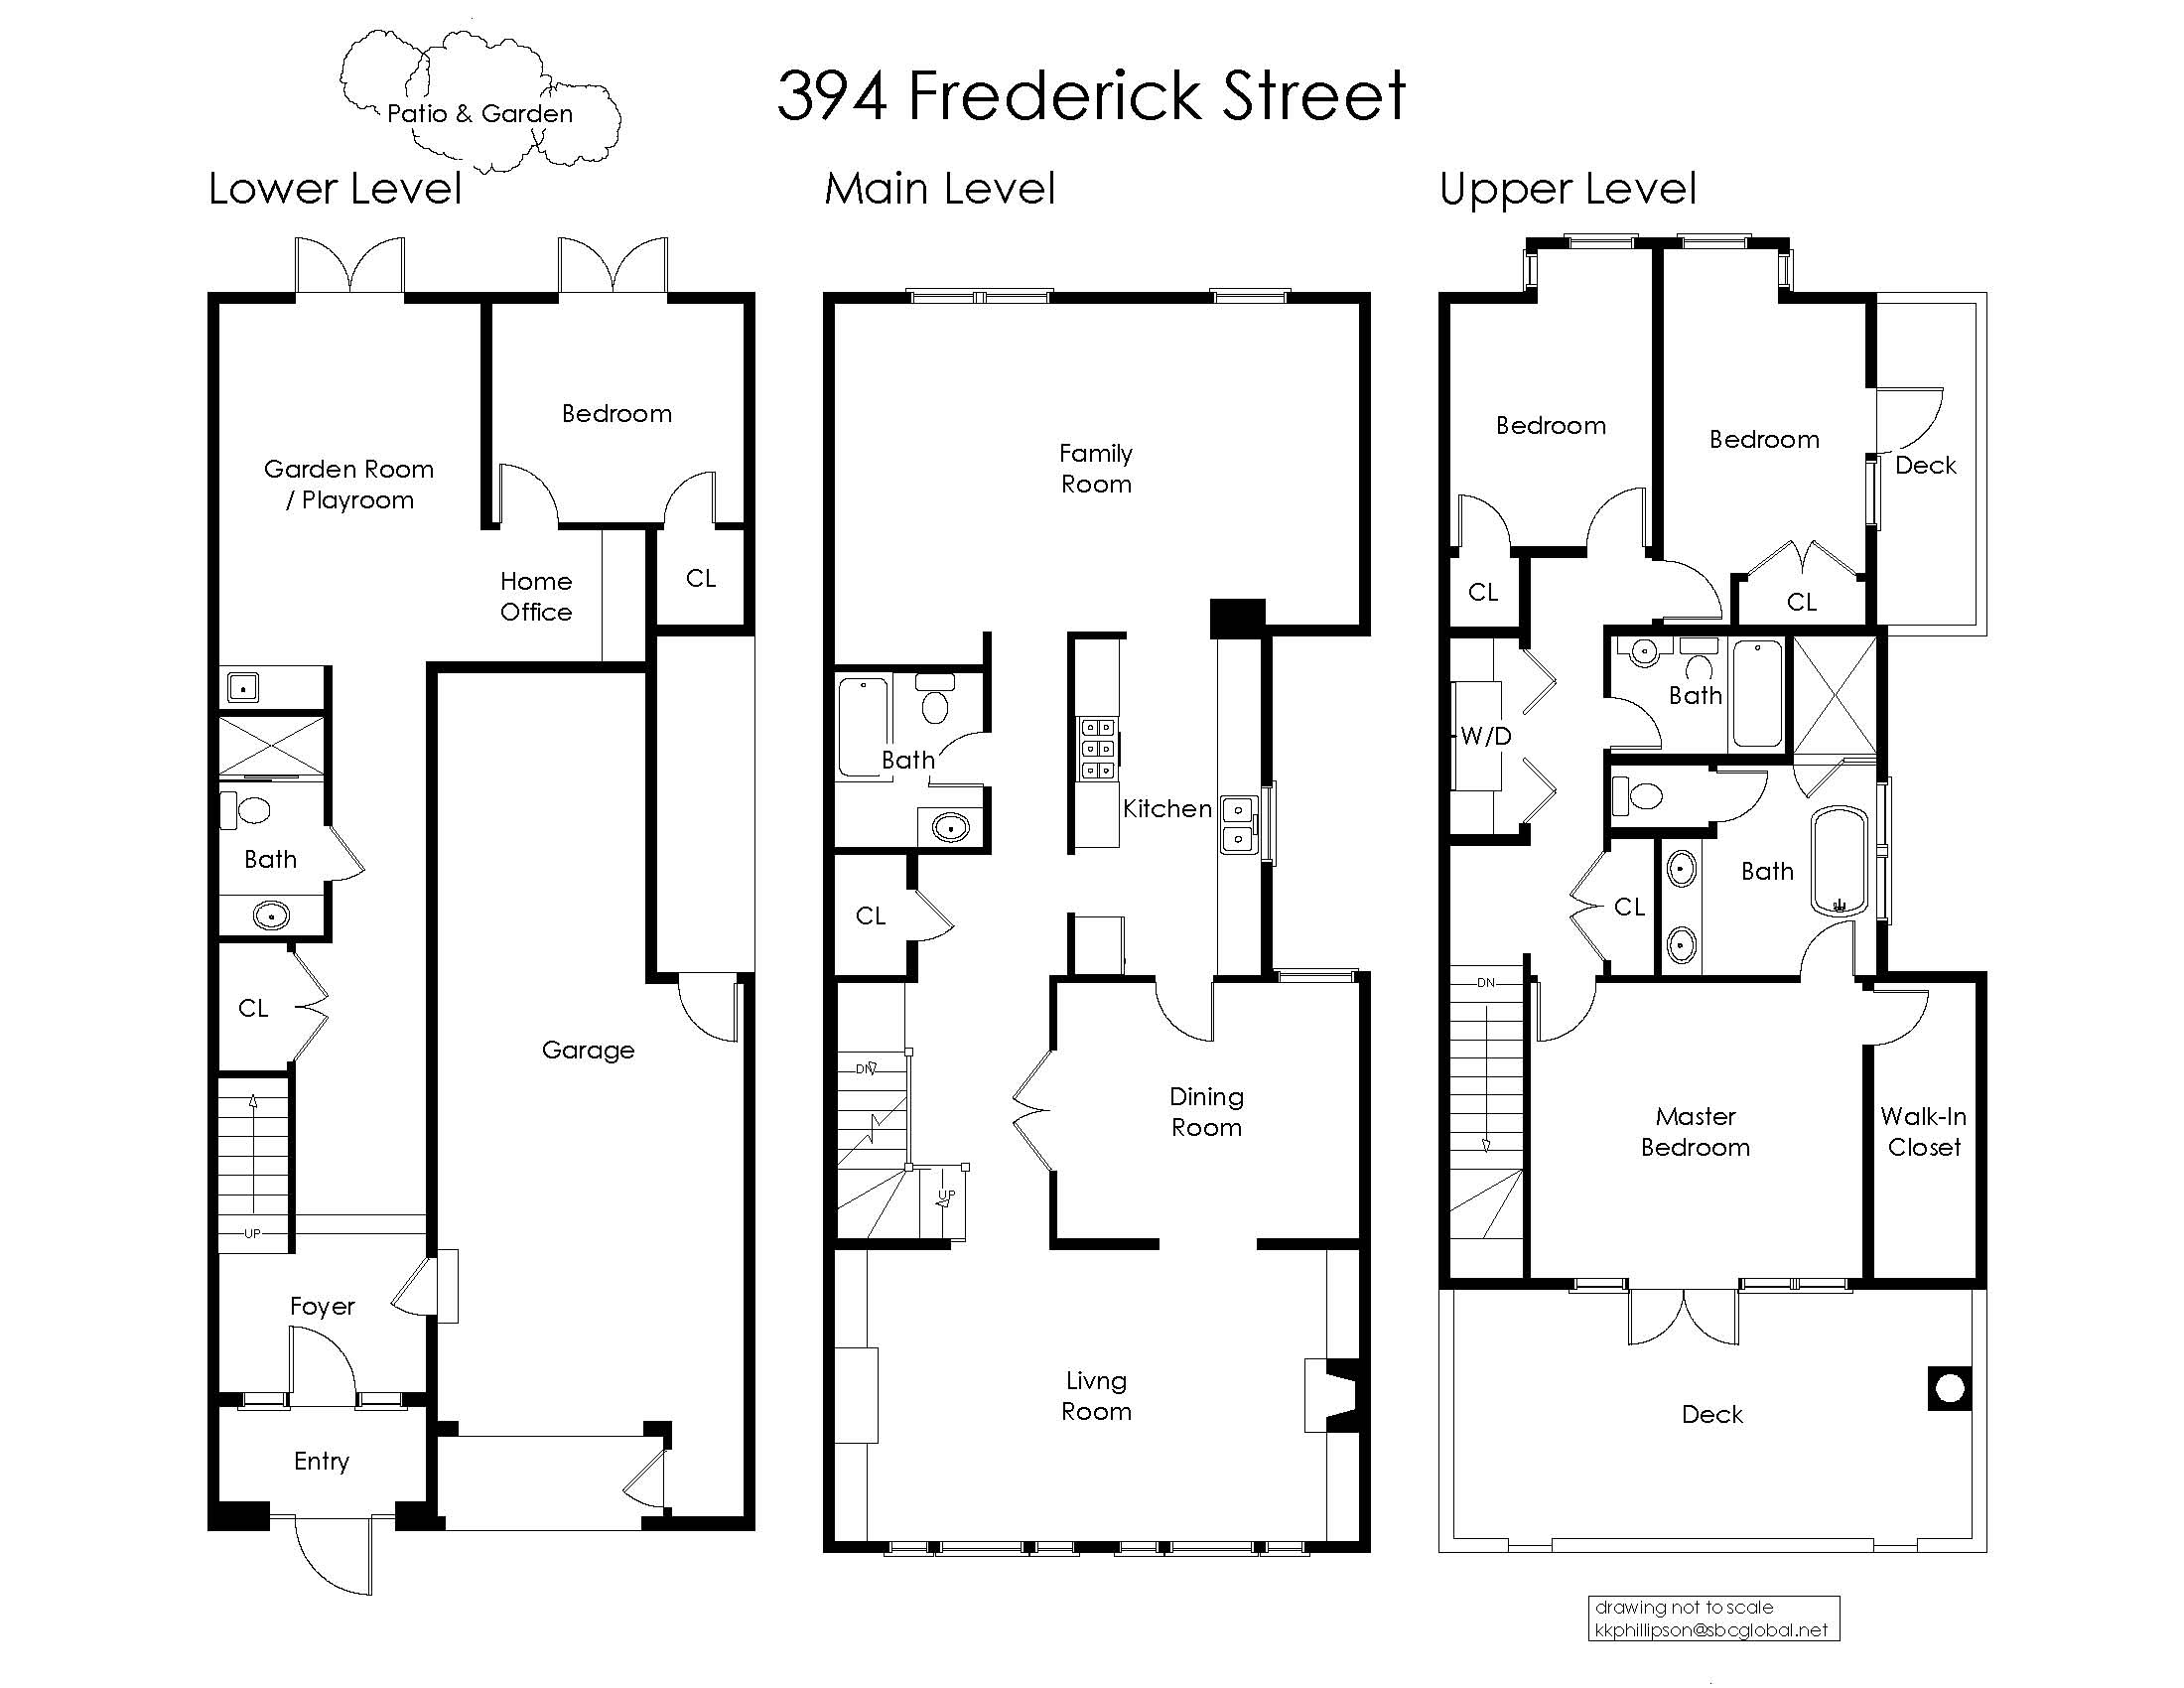 frederick new floor plans for marketing